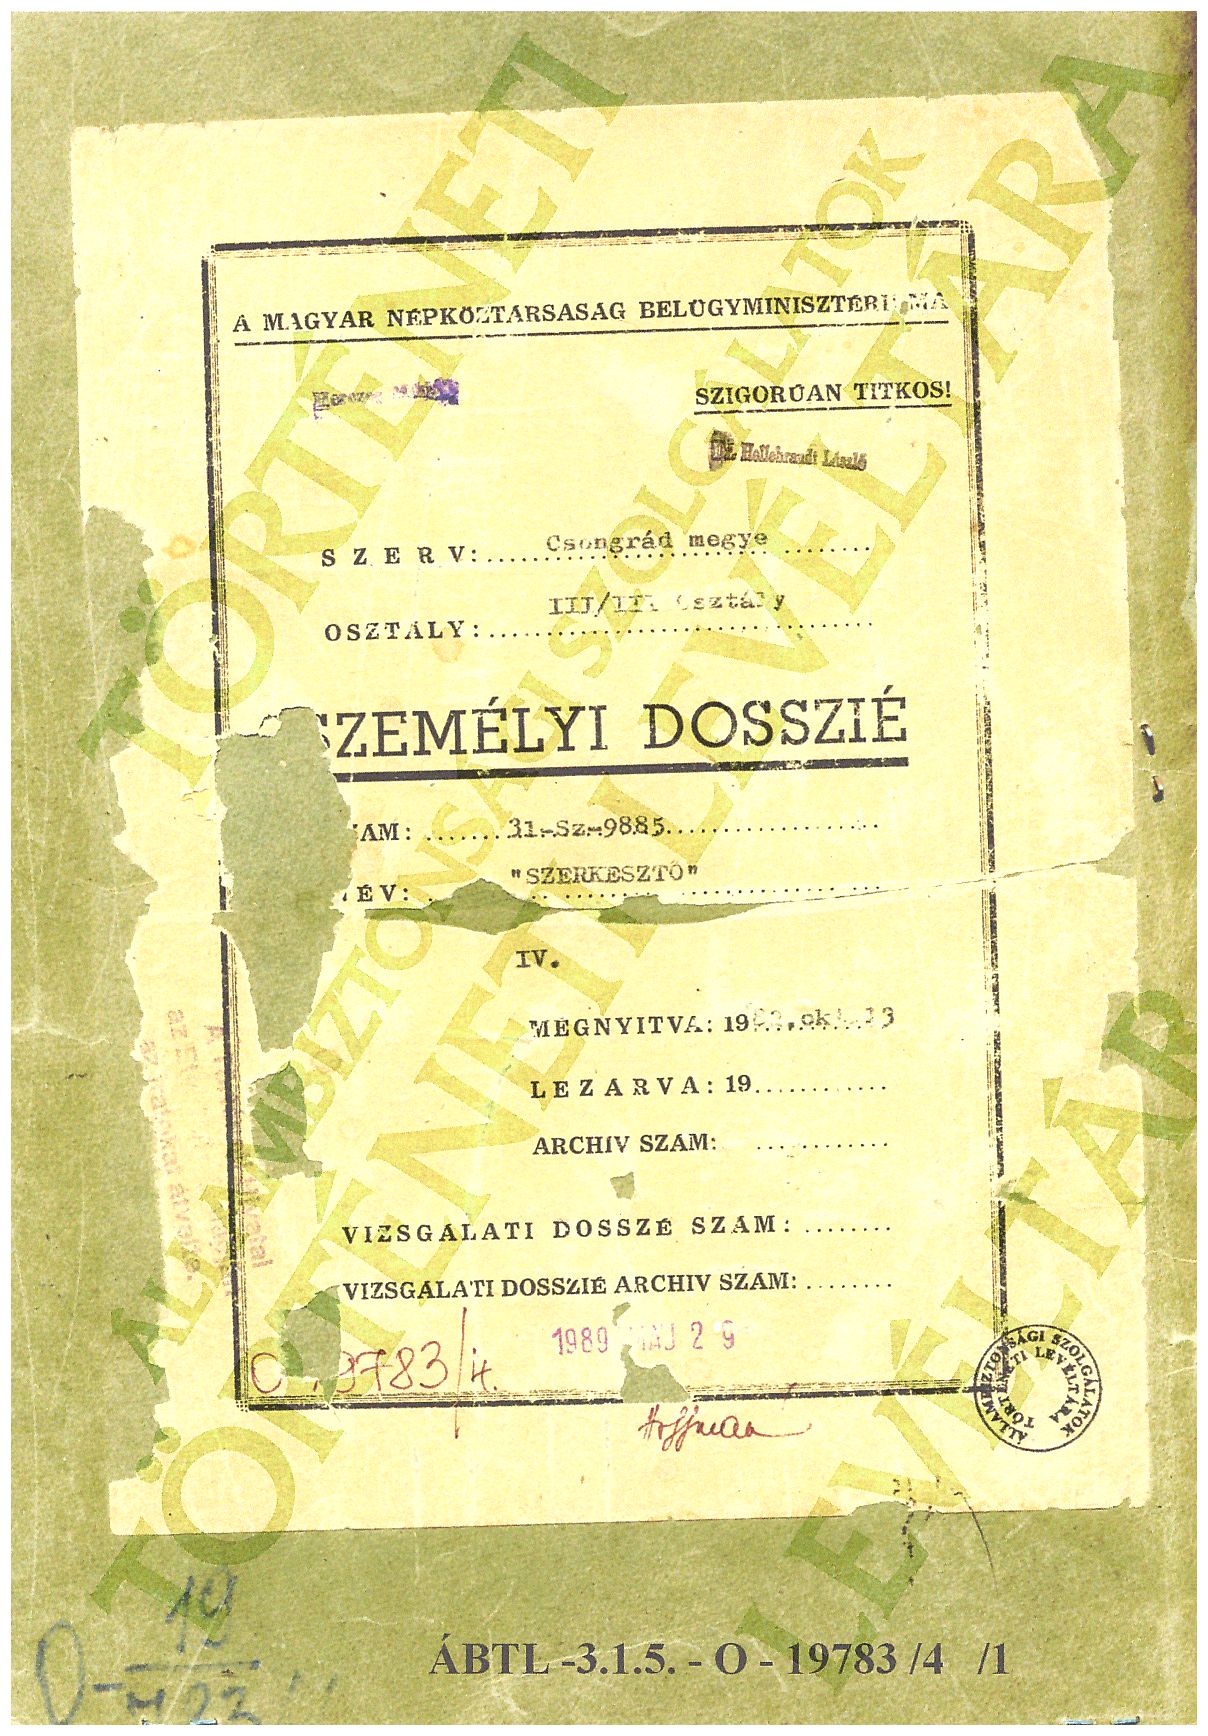 Hungarian Secret Agency dossier from 1978